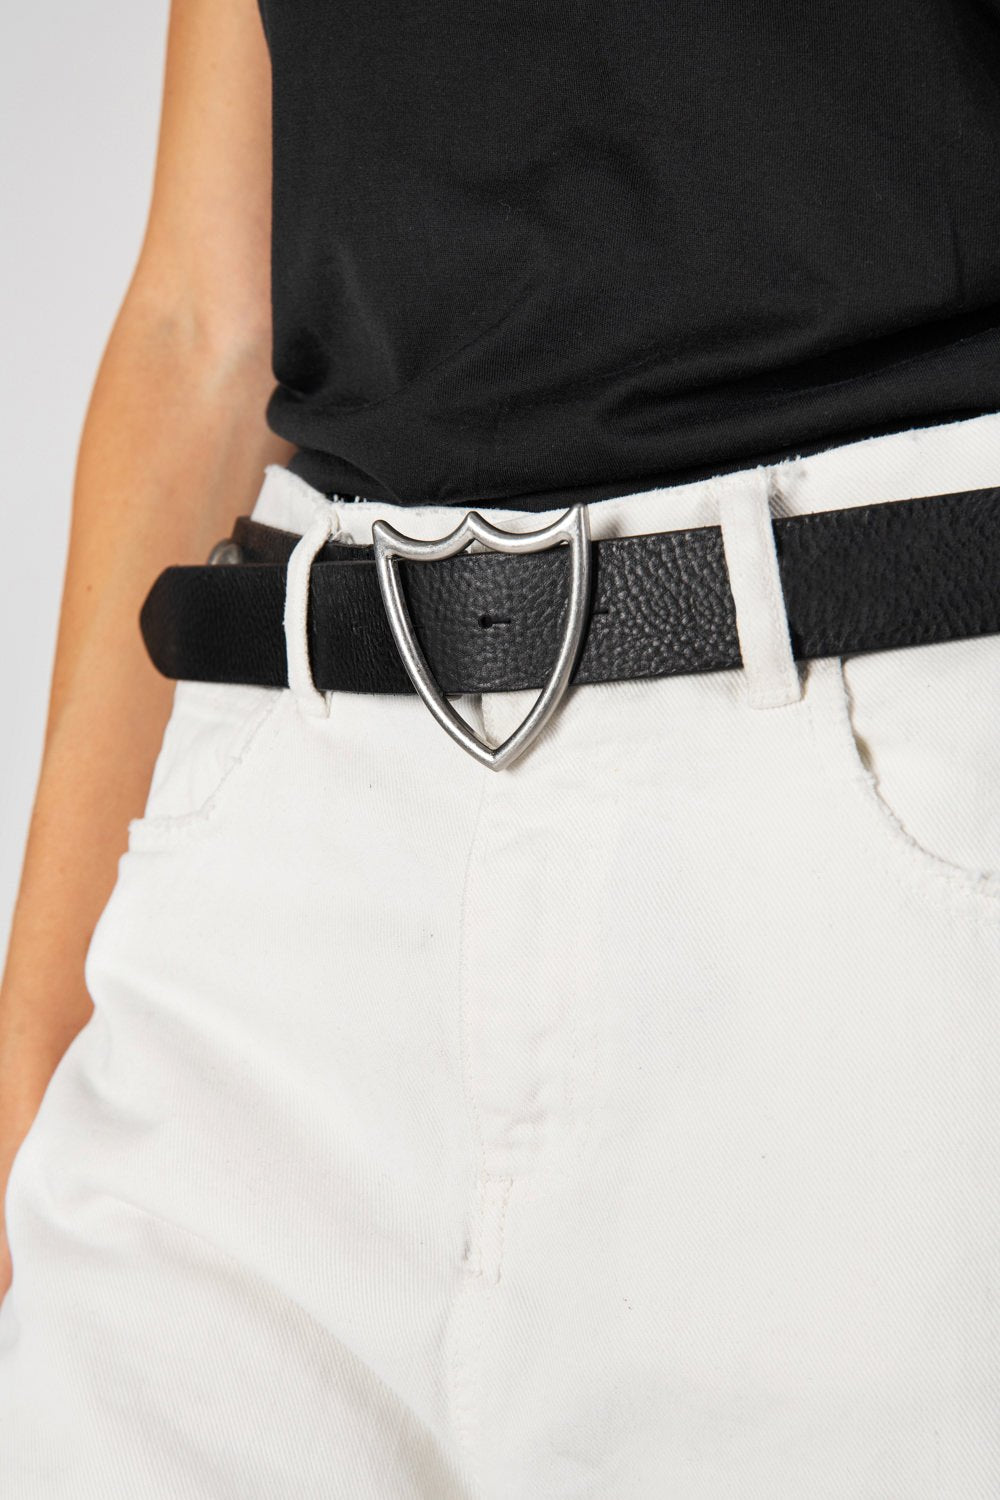 SHIELD BELT Black leather belt. Shield shaped buckle. 3,5 cm height. HTC LOS ANGELES